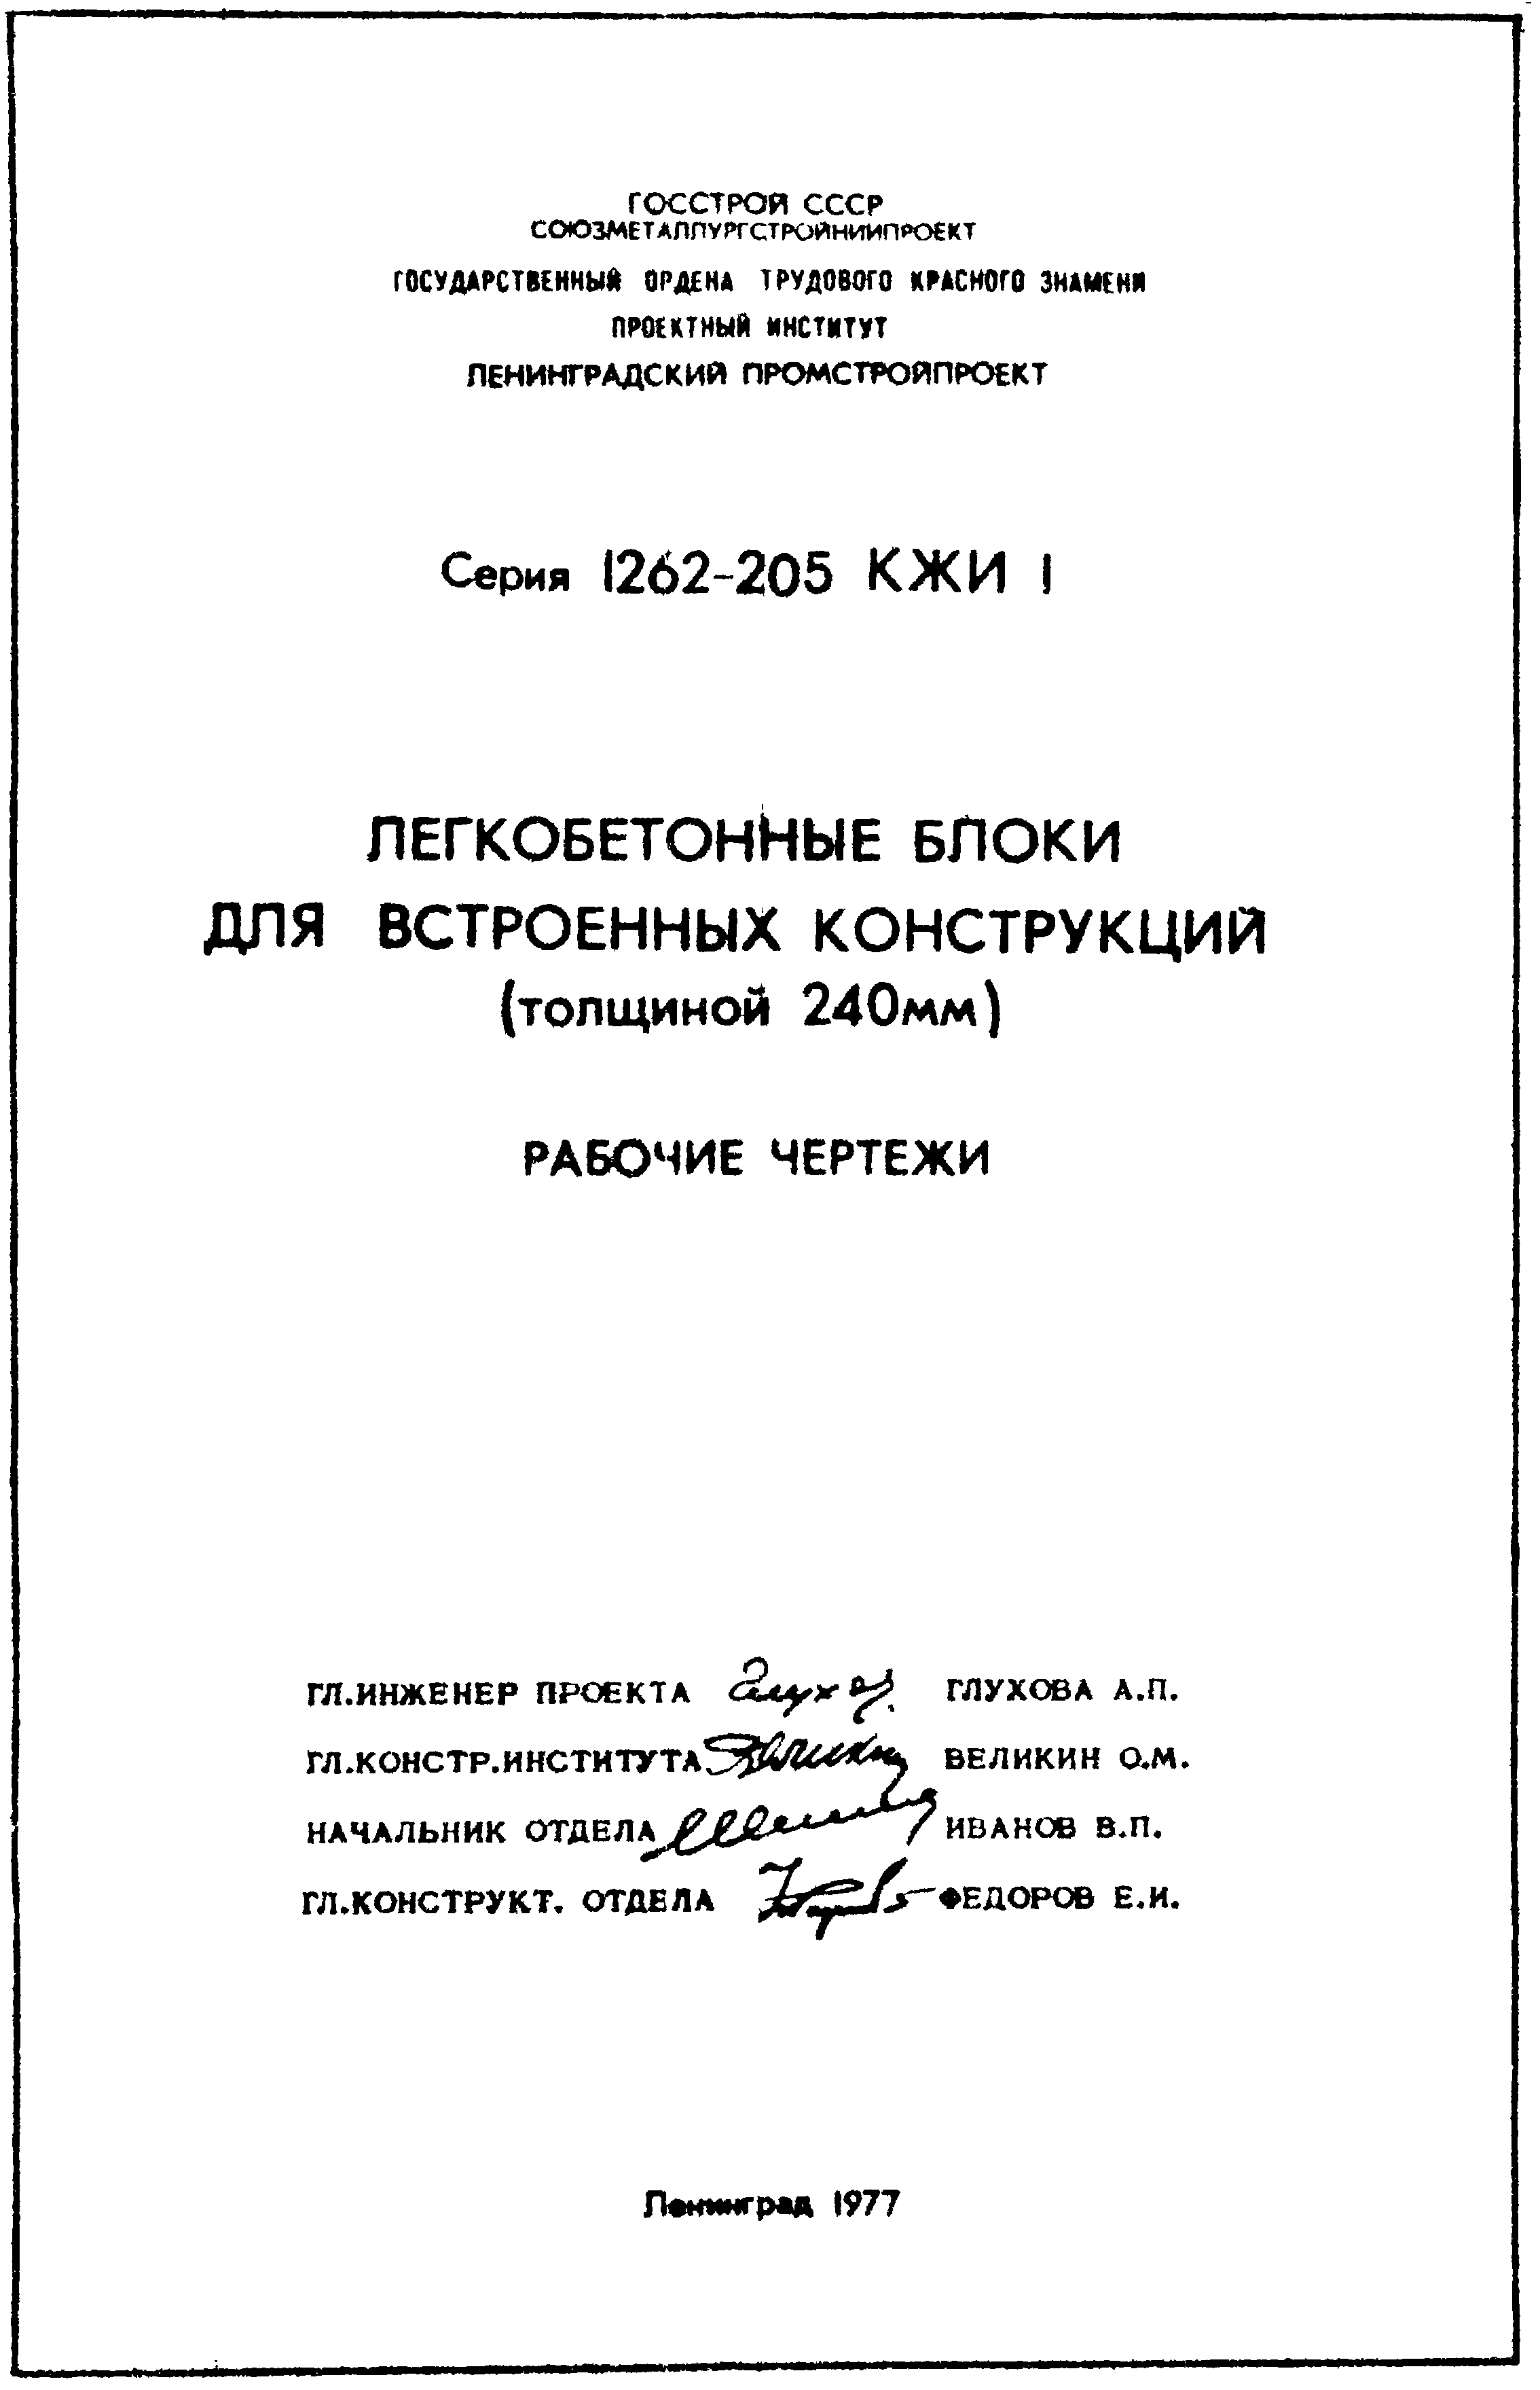 Серия 1.262-205 КЖИ1